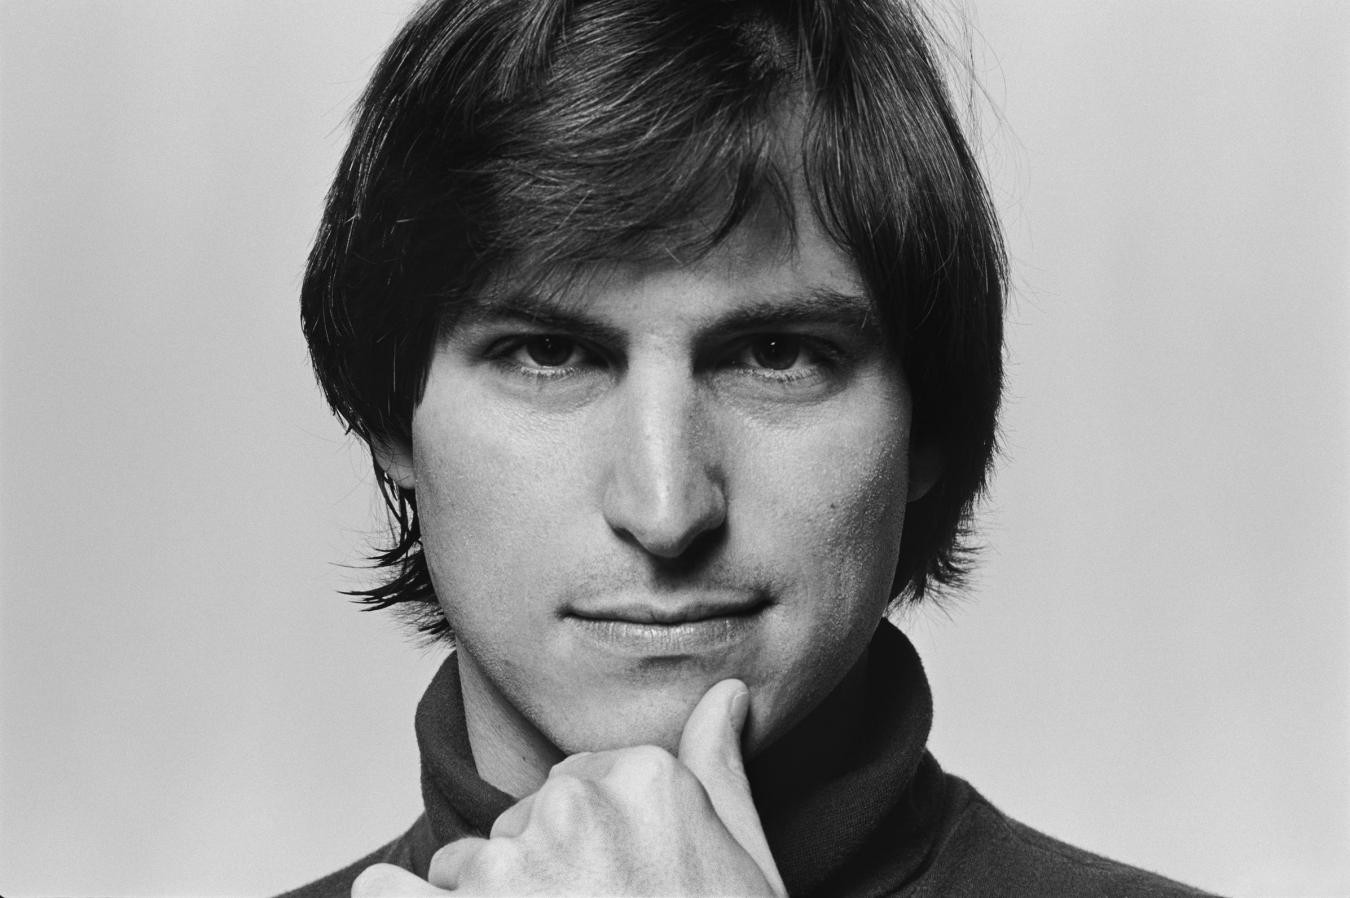 Steve Jobs in Magnolia Pictures' Steve Jobs: Man in the Machine (2015)